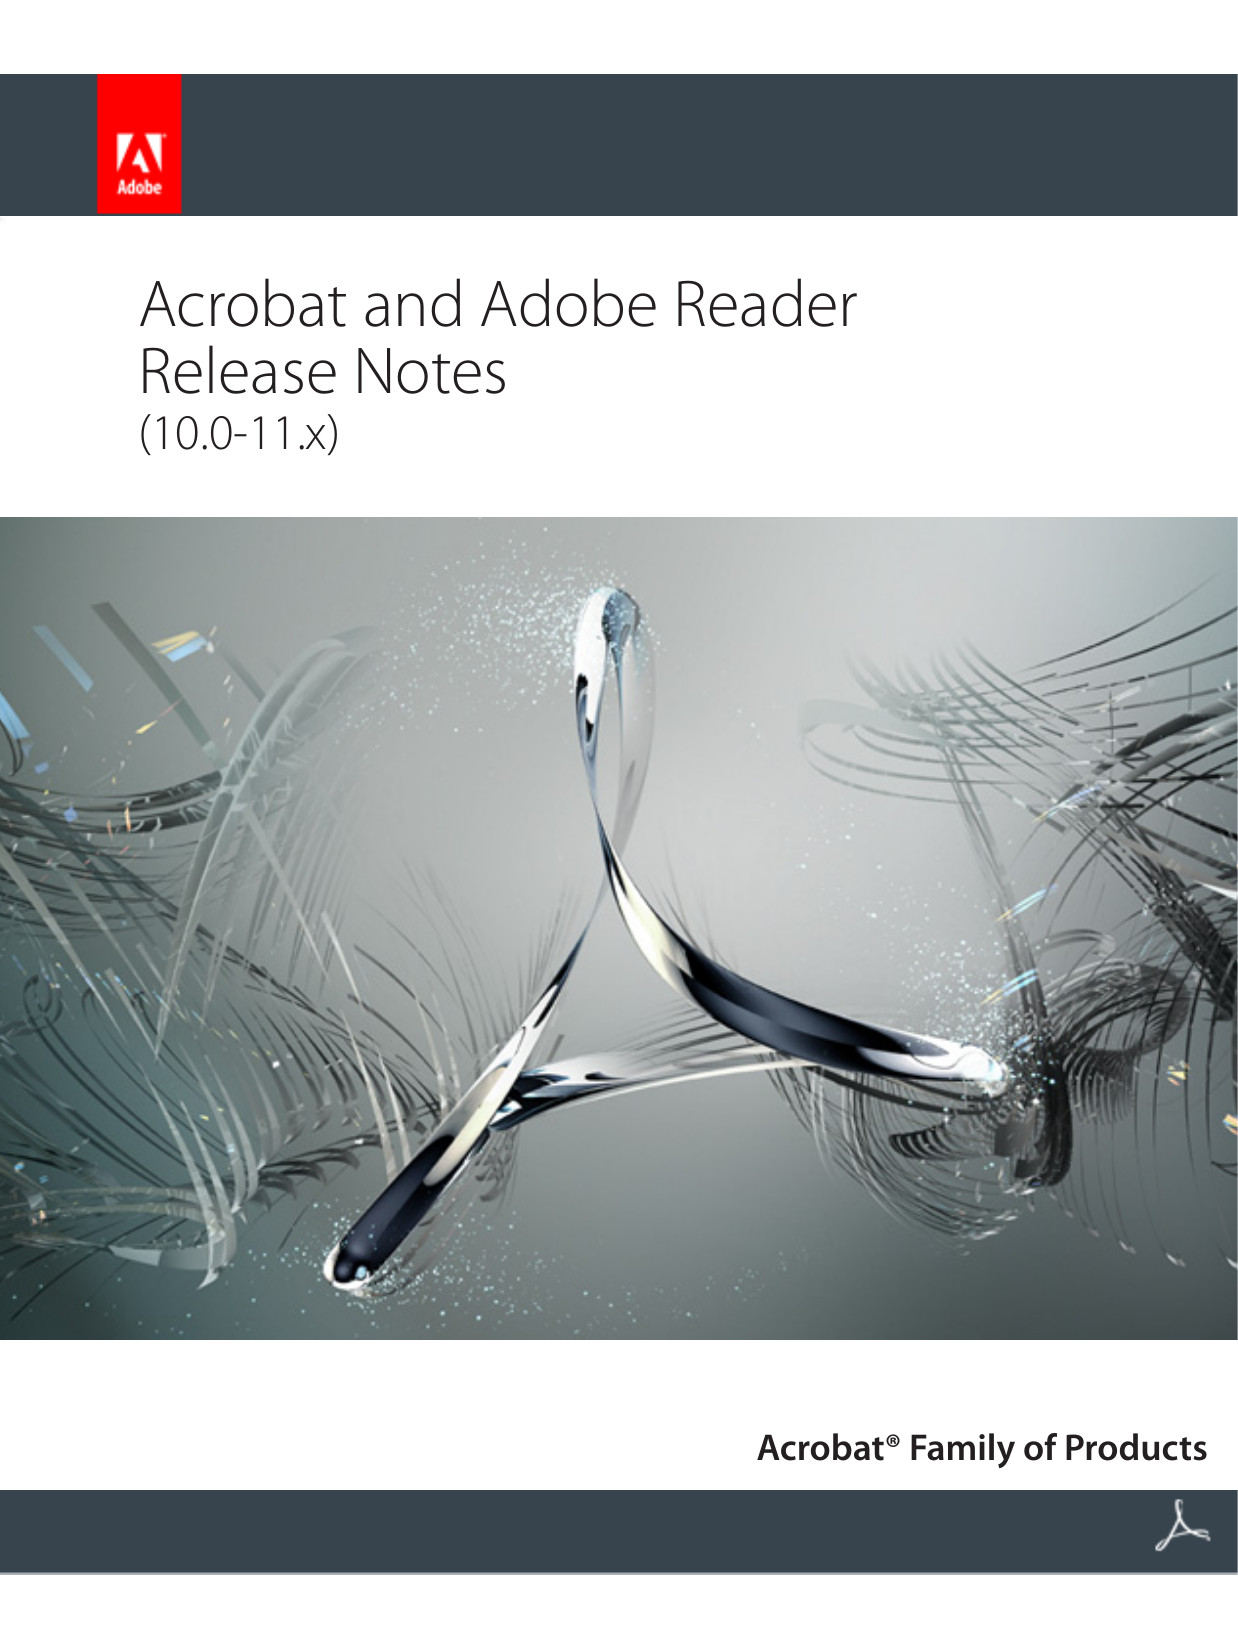 adobe reader for mac os x 10.5.8